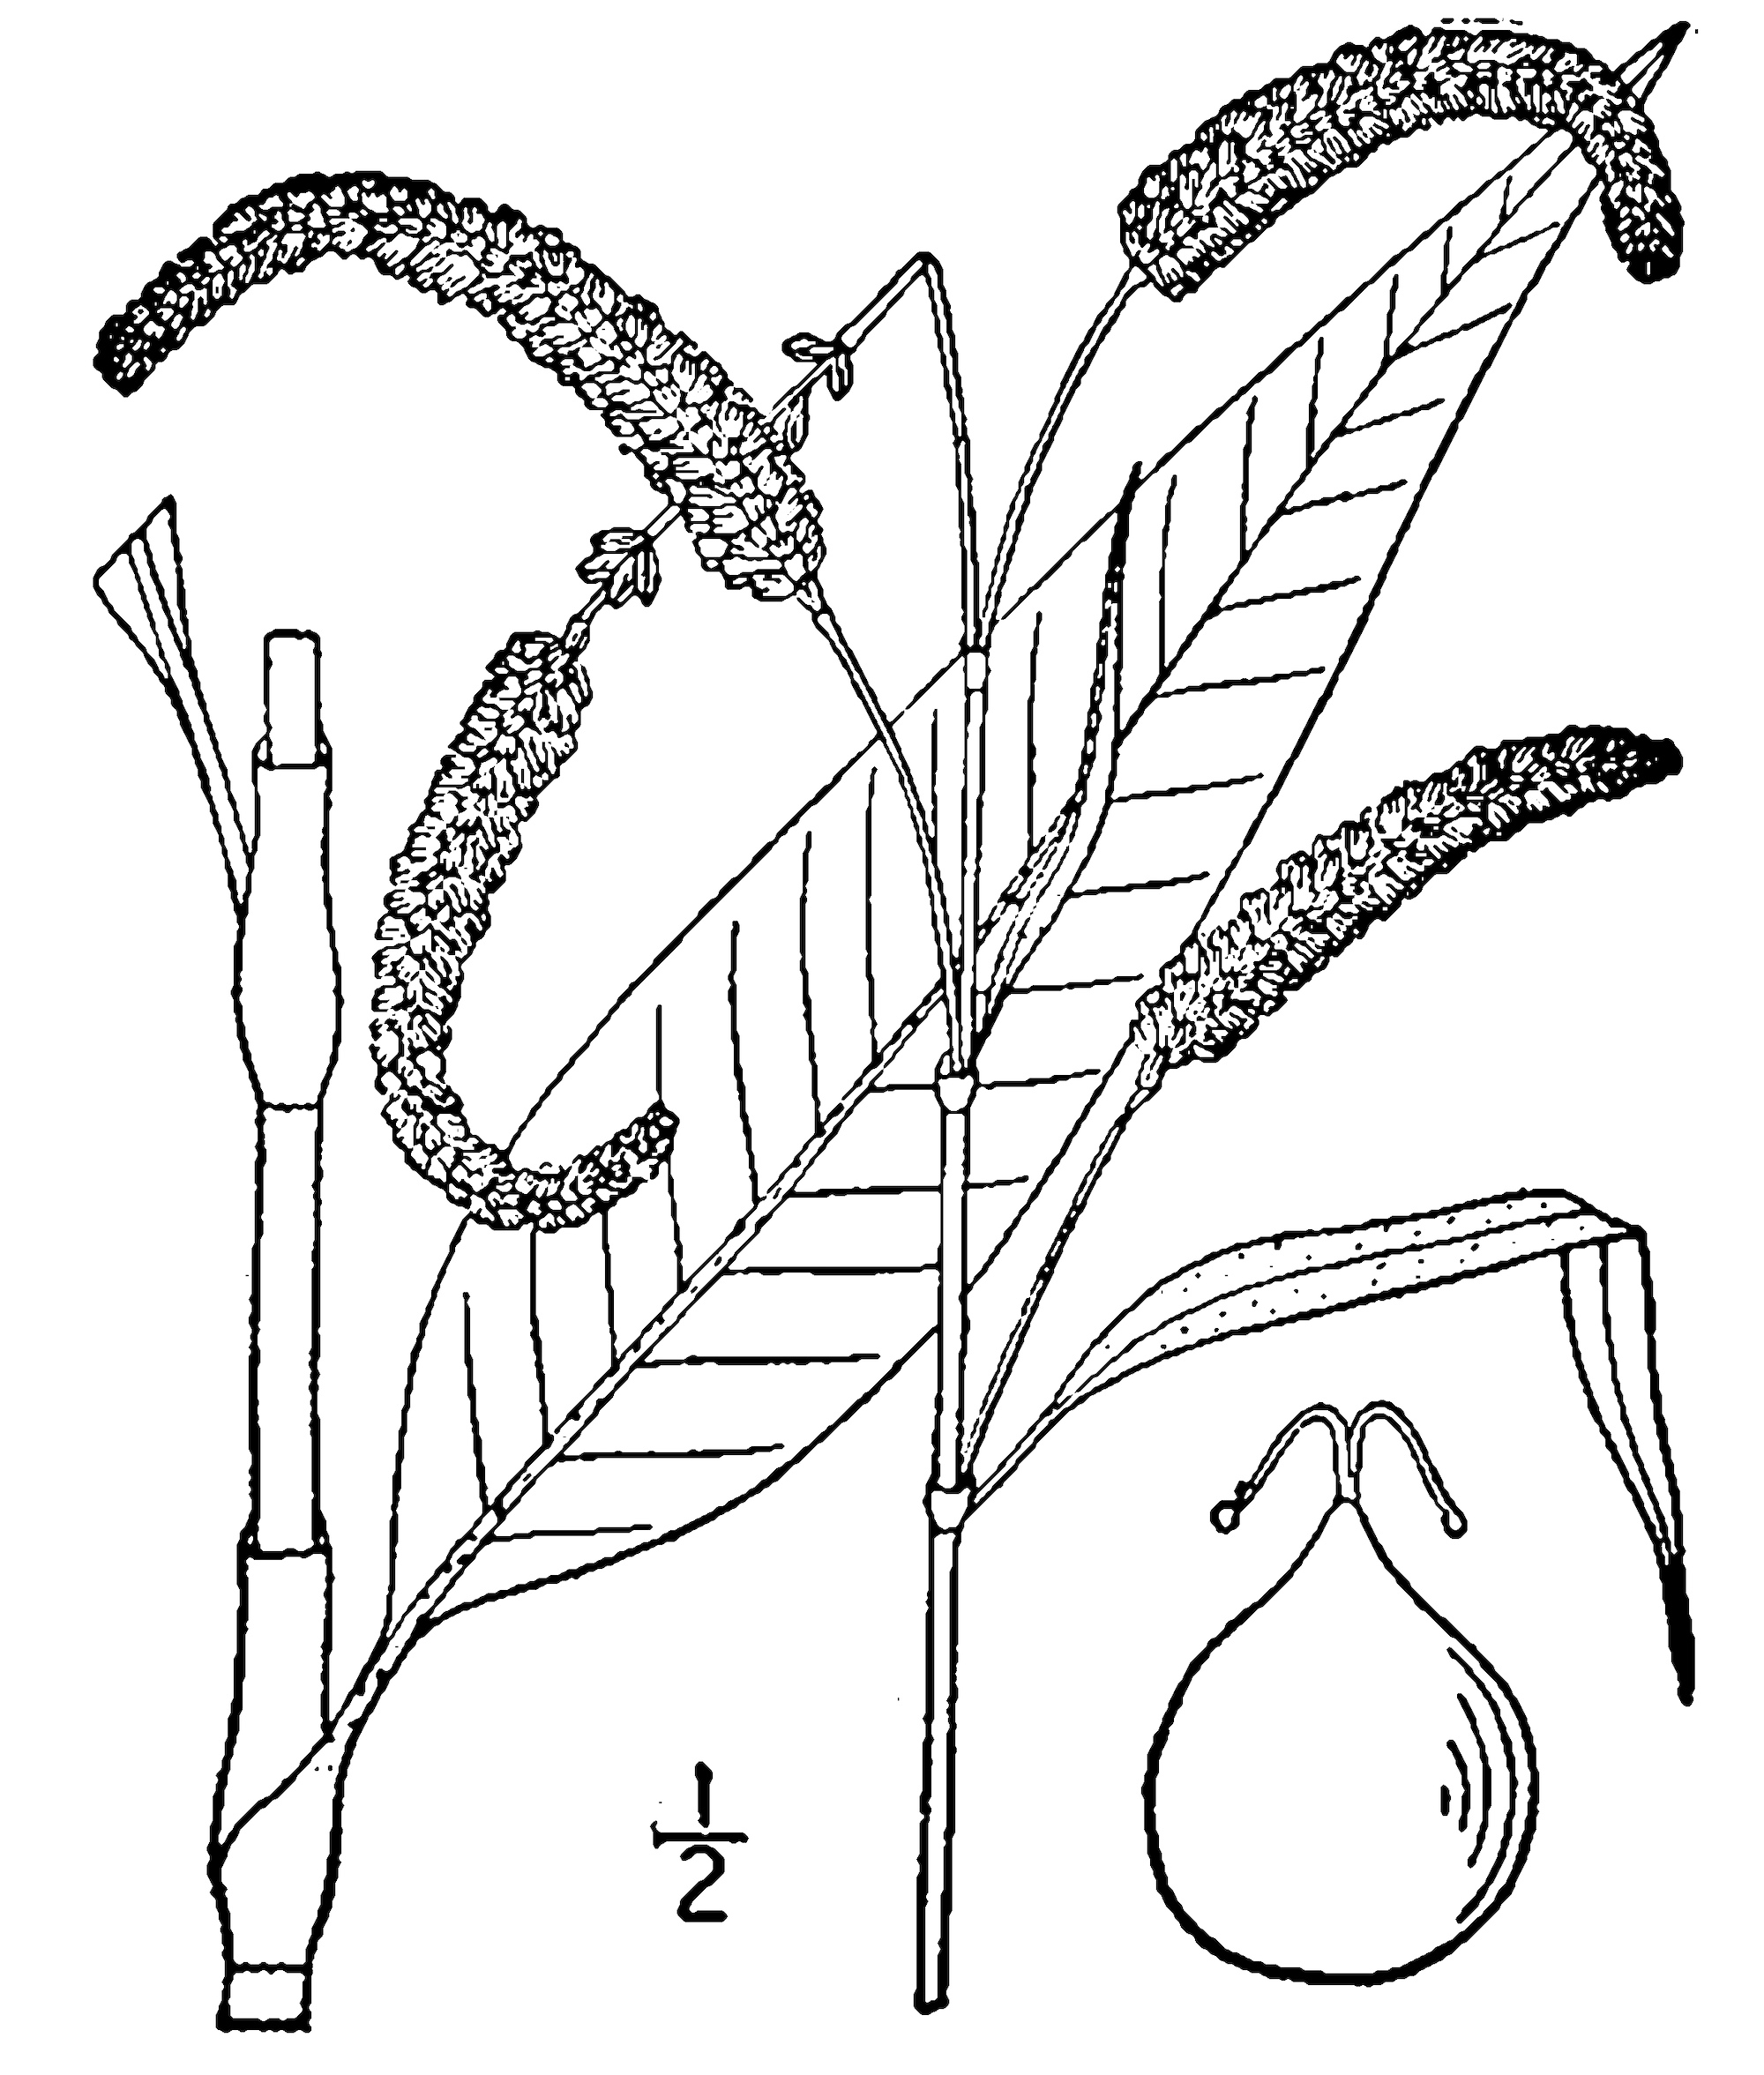 1913 Nodding Smartweed botanical drawing.